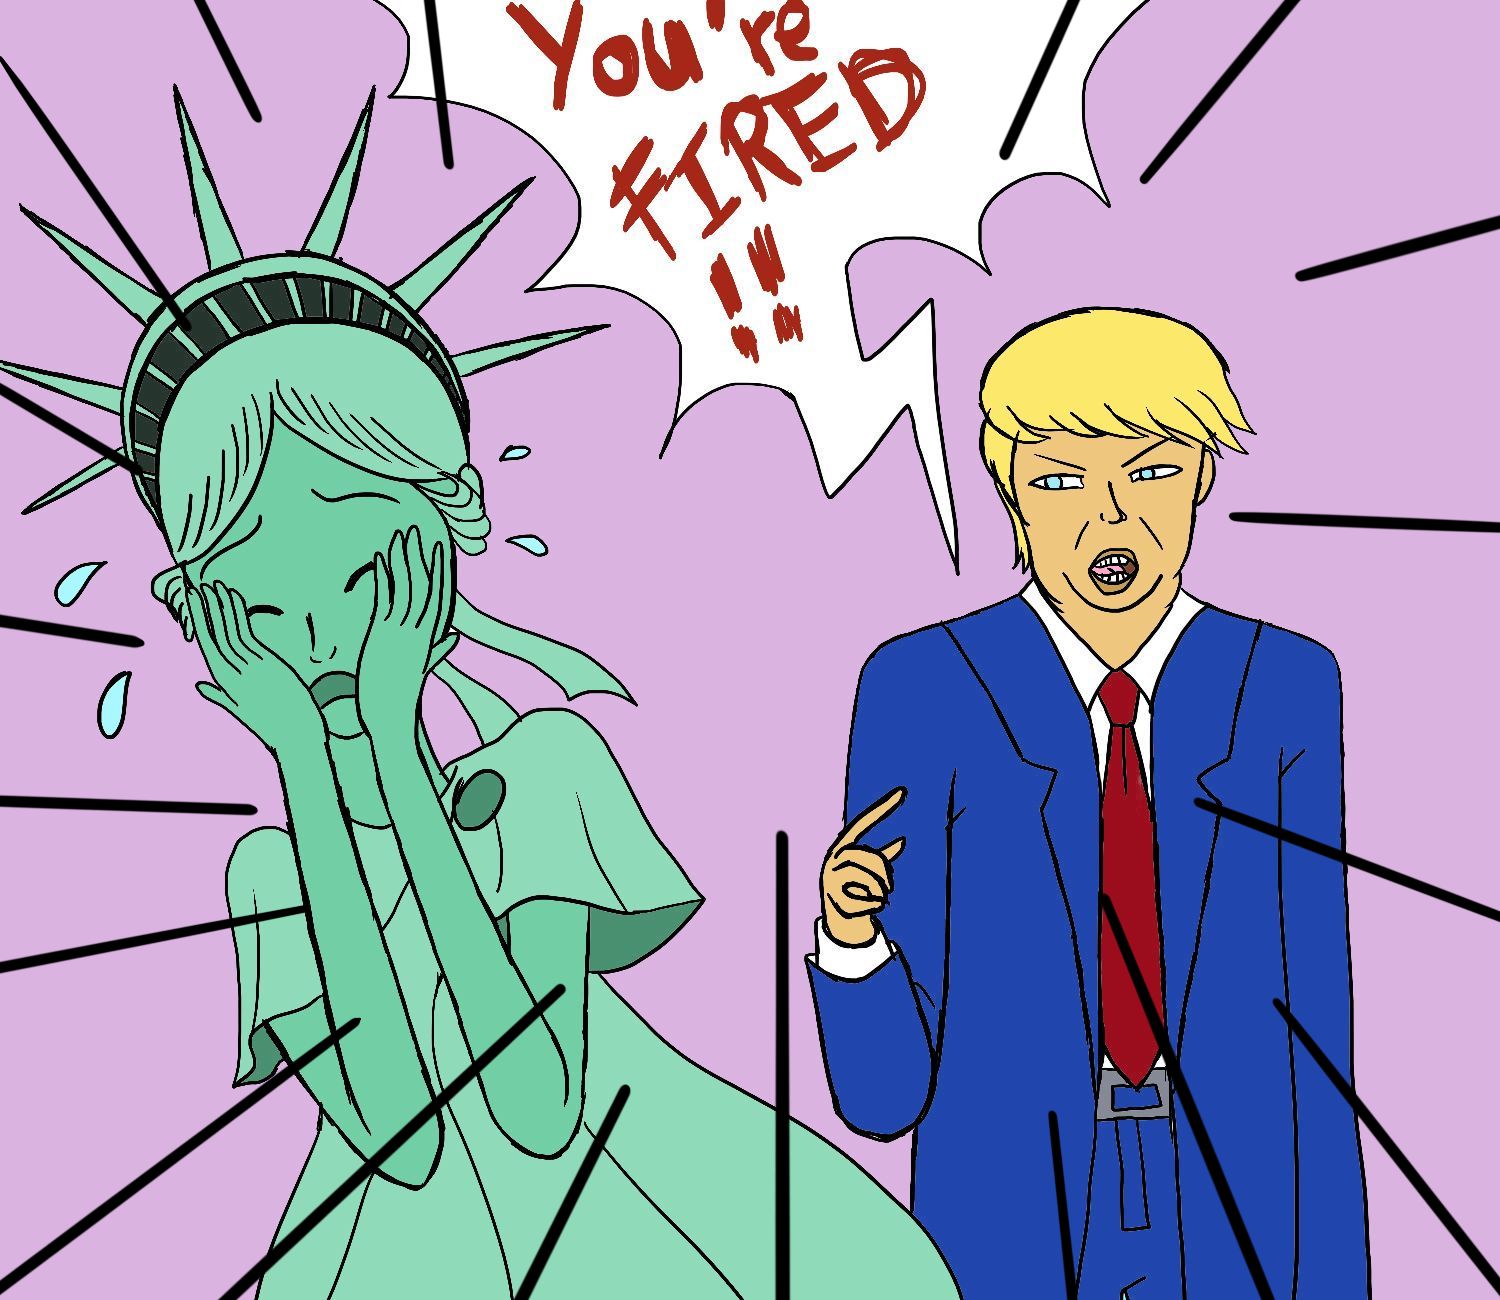 Comic of President Trump firing the Statue of Liberty